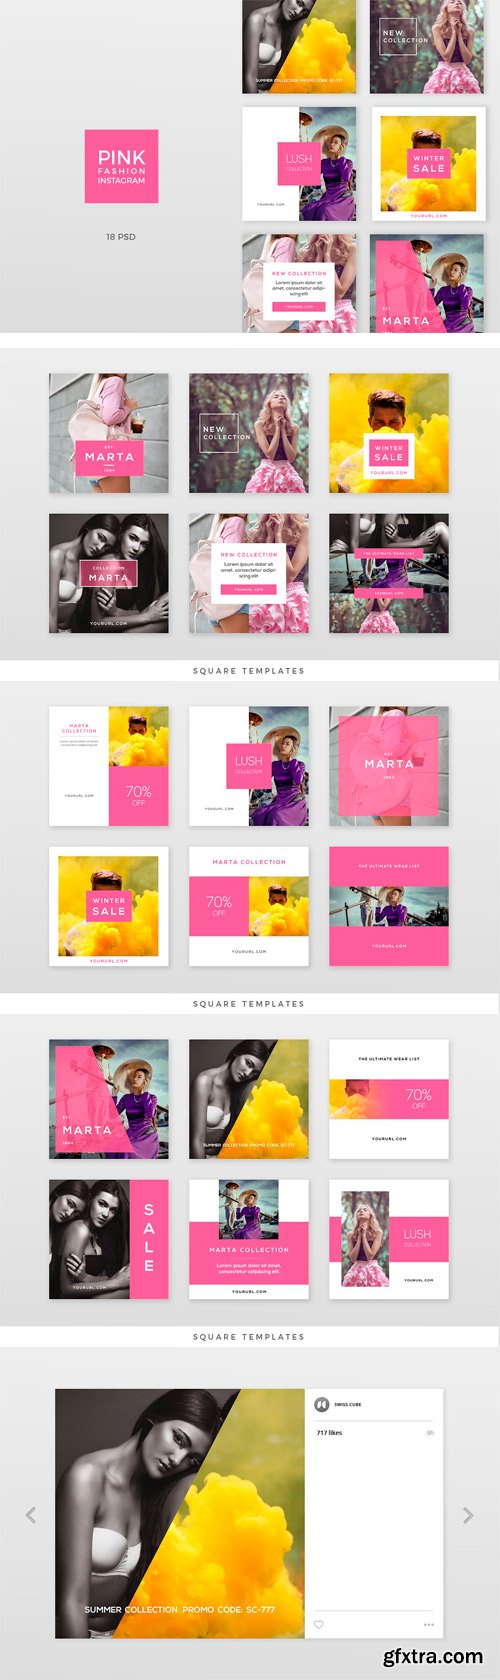 CM 1185813 - Pink Fashion Instagram Pack